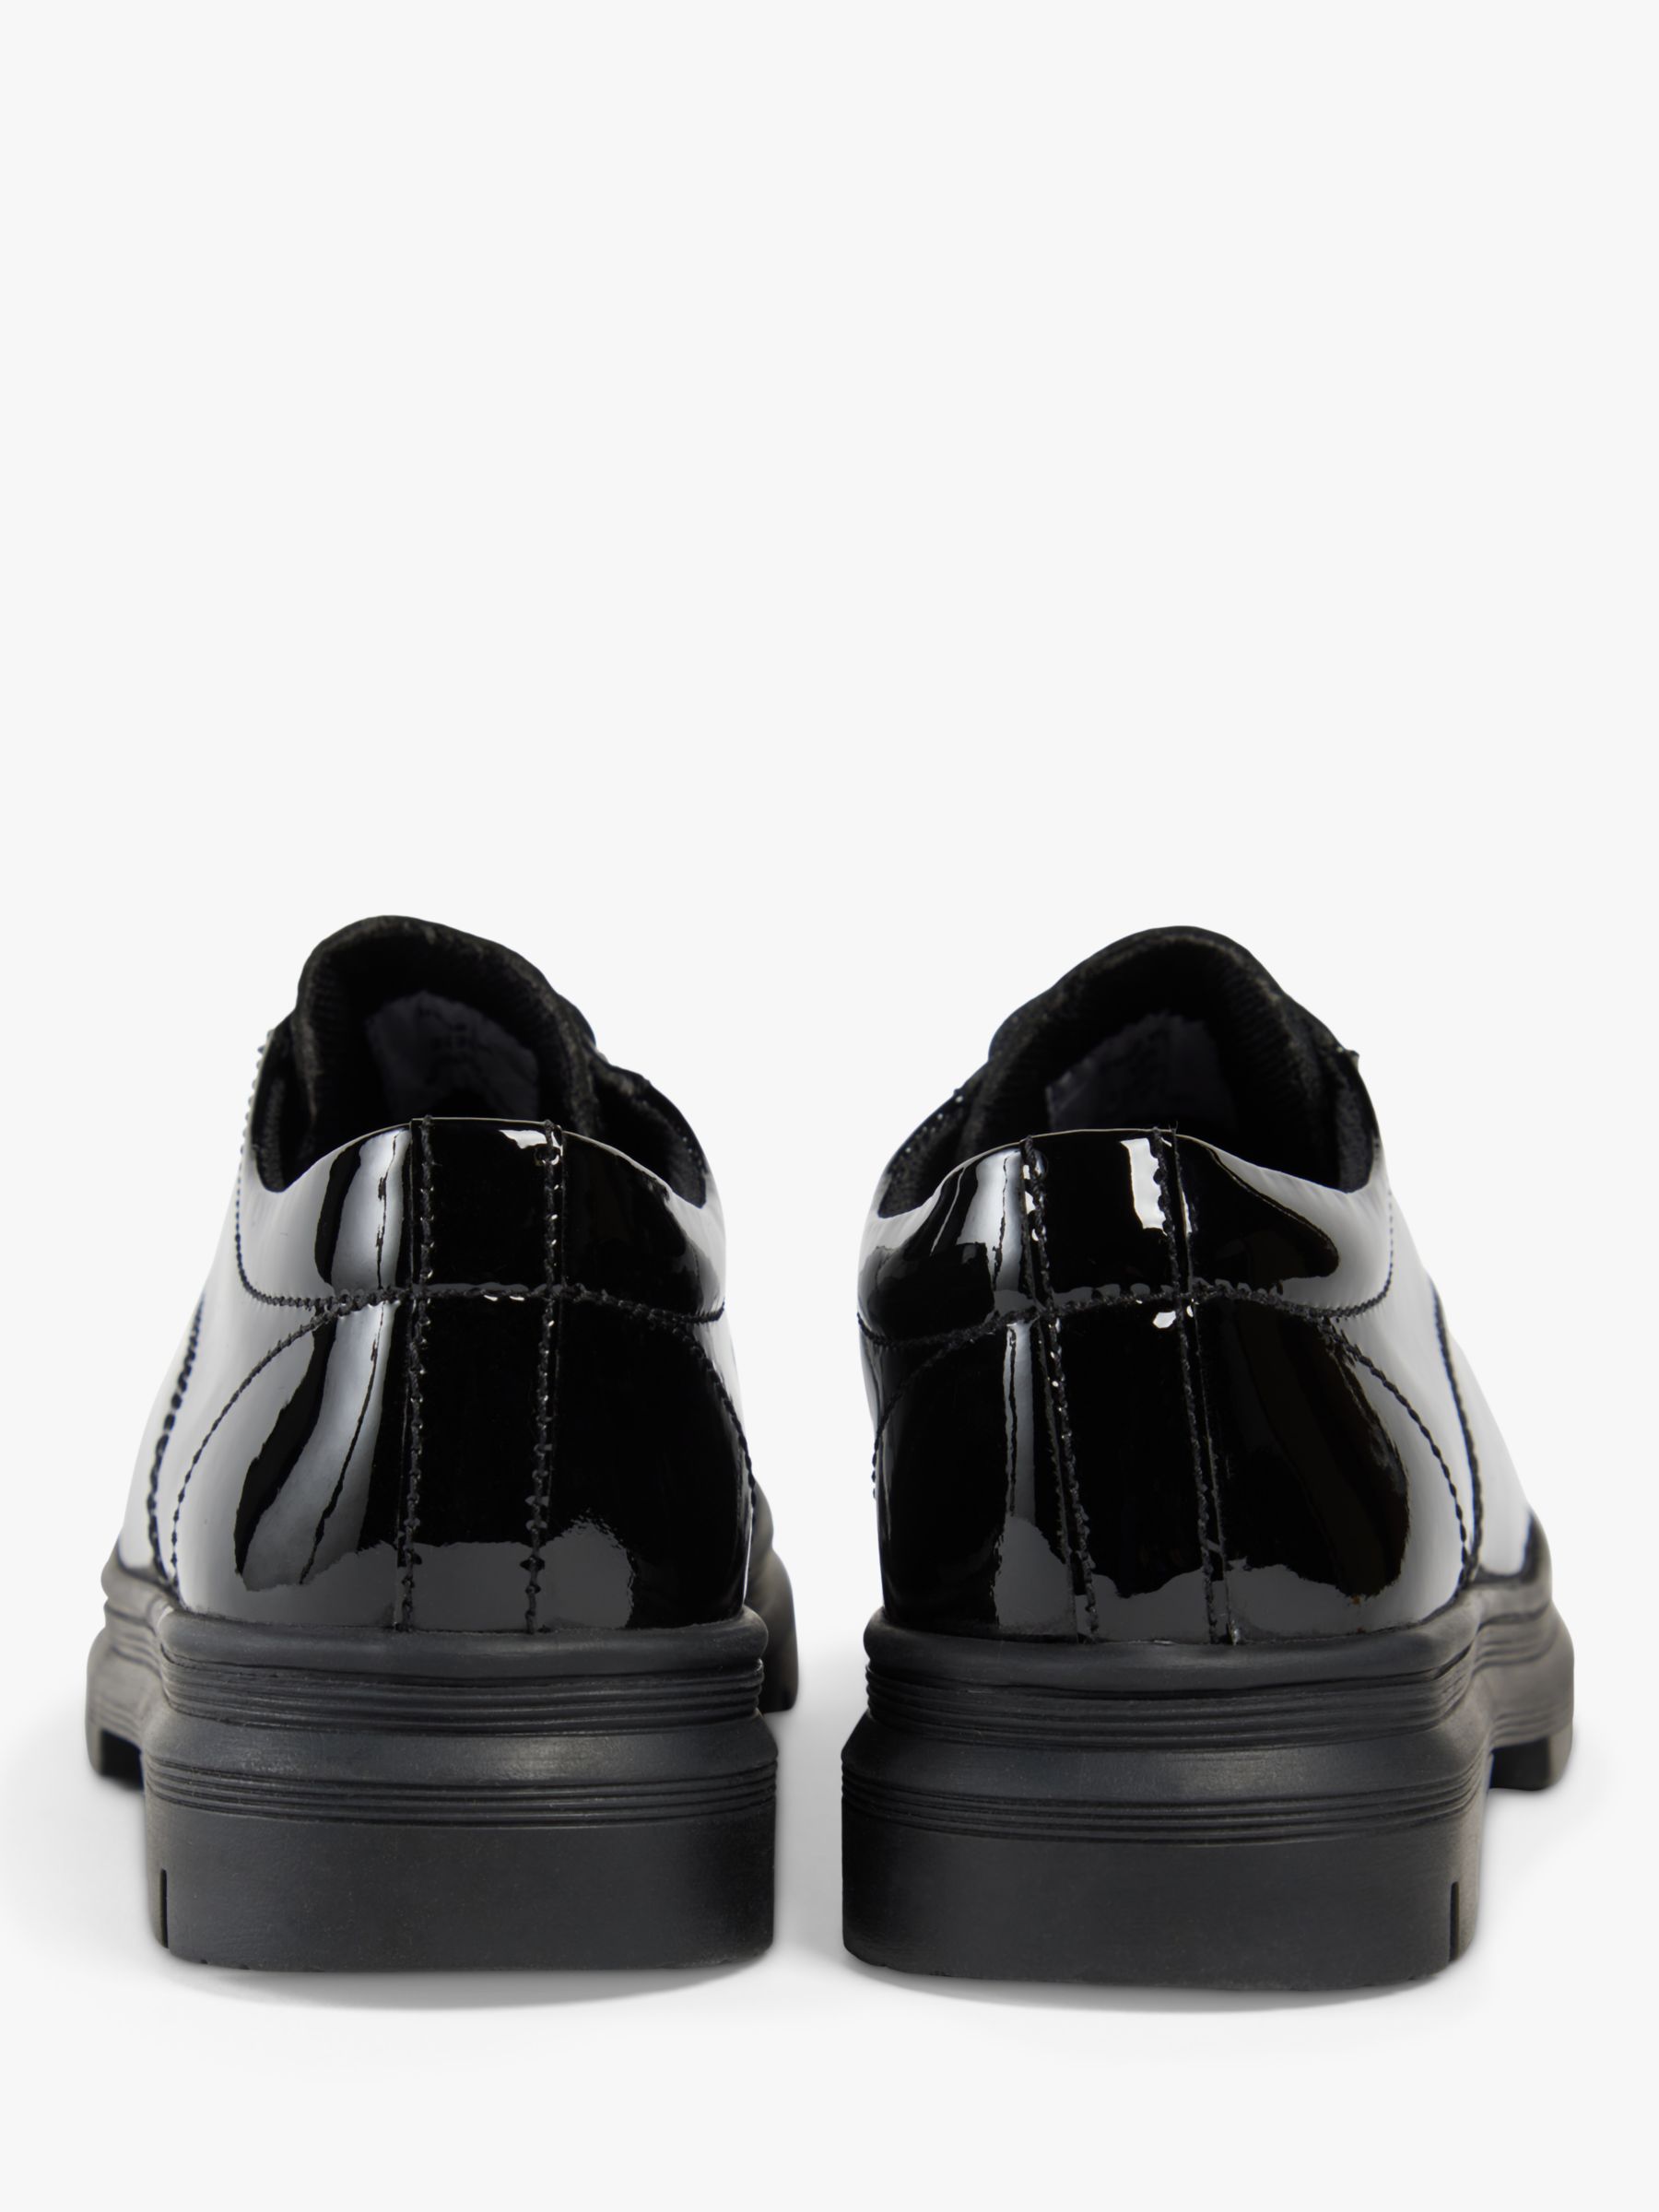 Pod Kids' Irene Patent Leather Lace Up Shoes, Black, 5